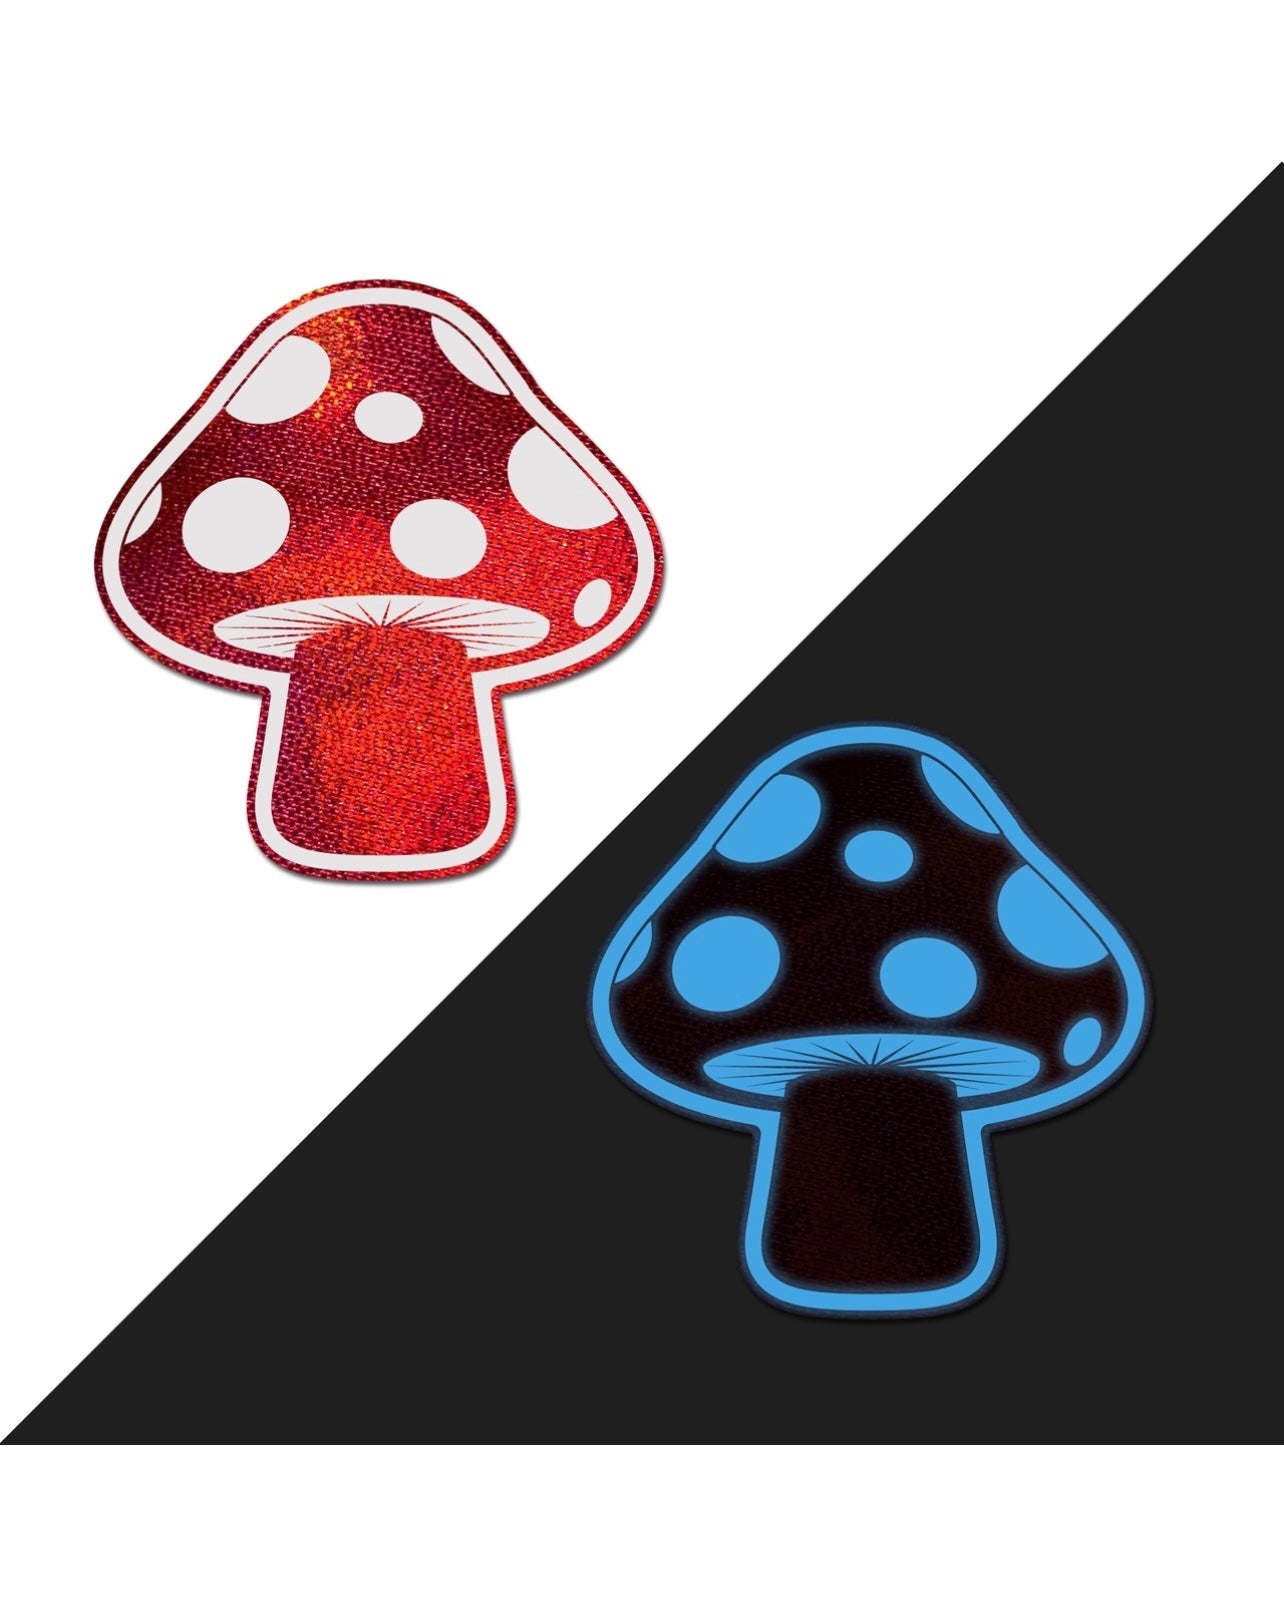 Mushroom: Shiny Red & White Glow-in-the-Dark Shroom Nipple Pasties, Pasties, - One Stop Rave